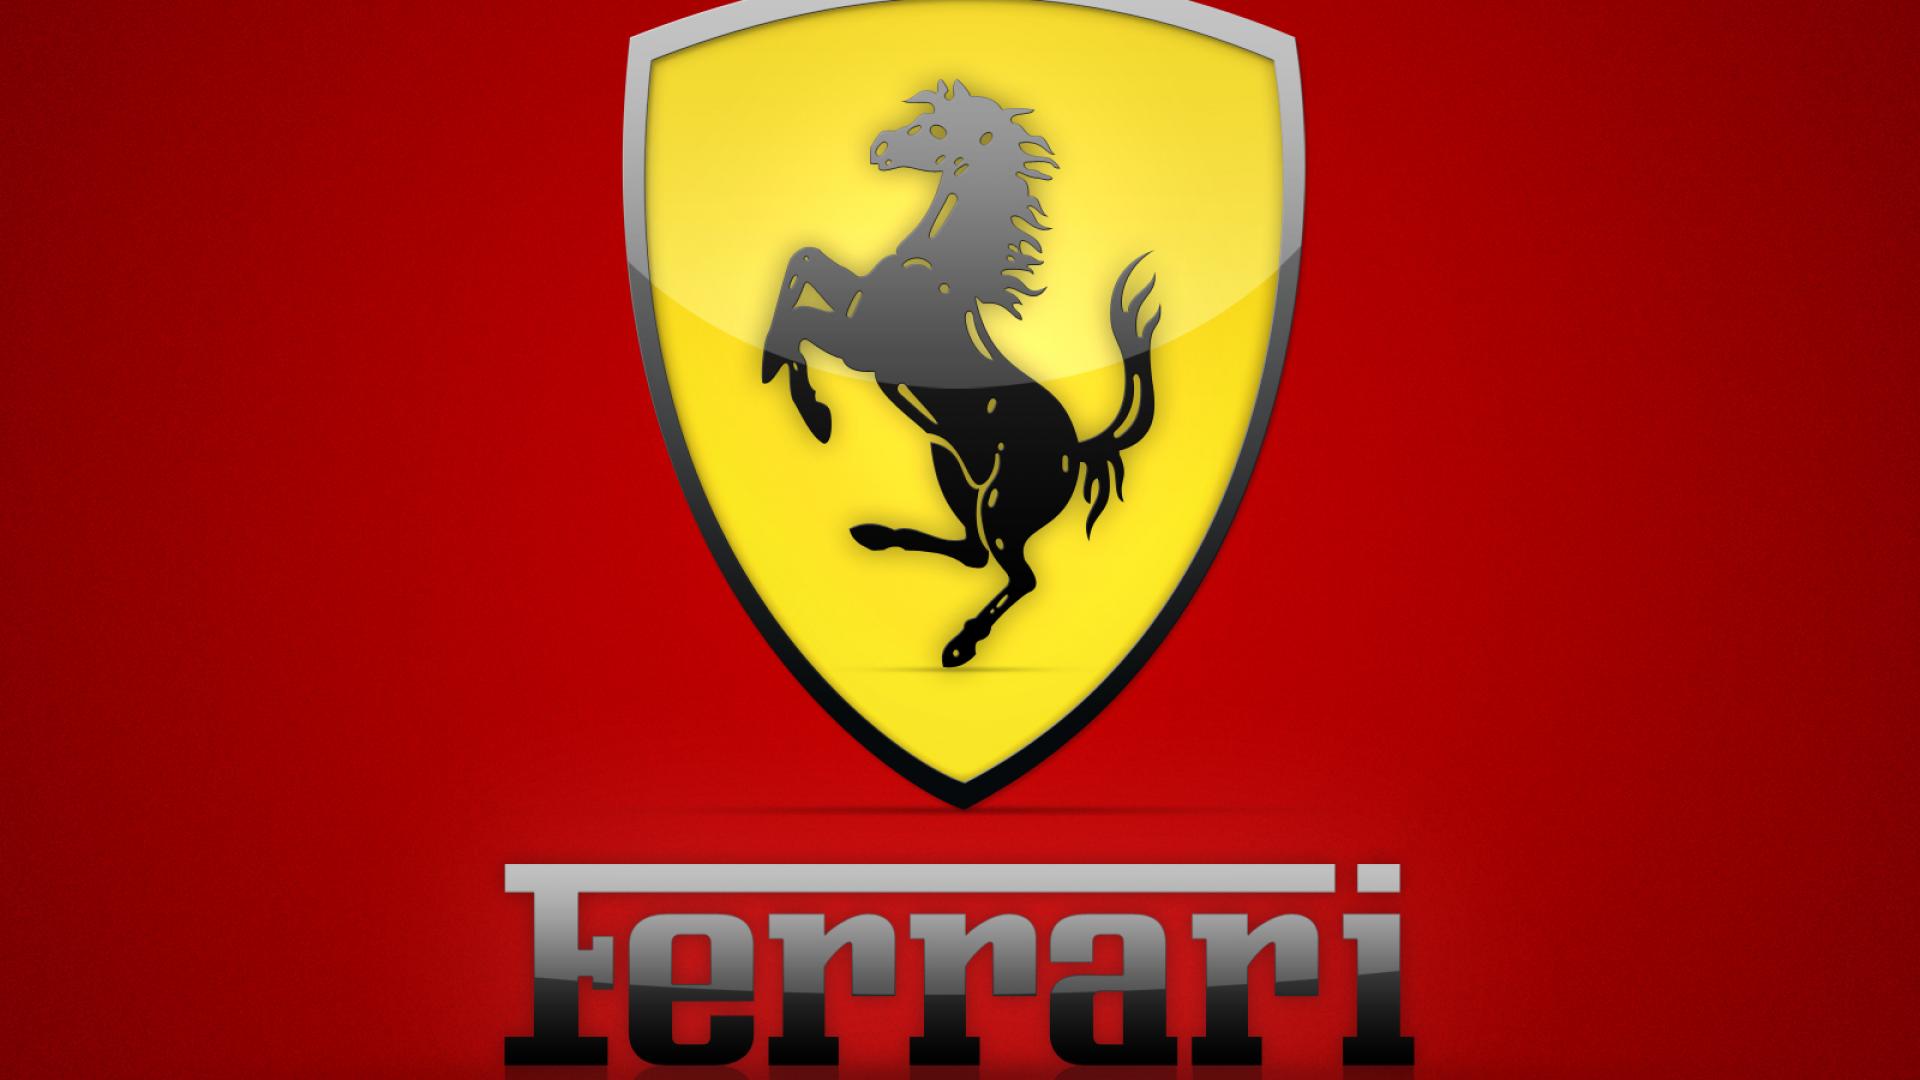 Ferrari Logo Images Hd Desktop Wallpapers 4k Hd